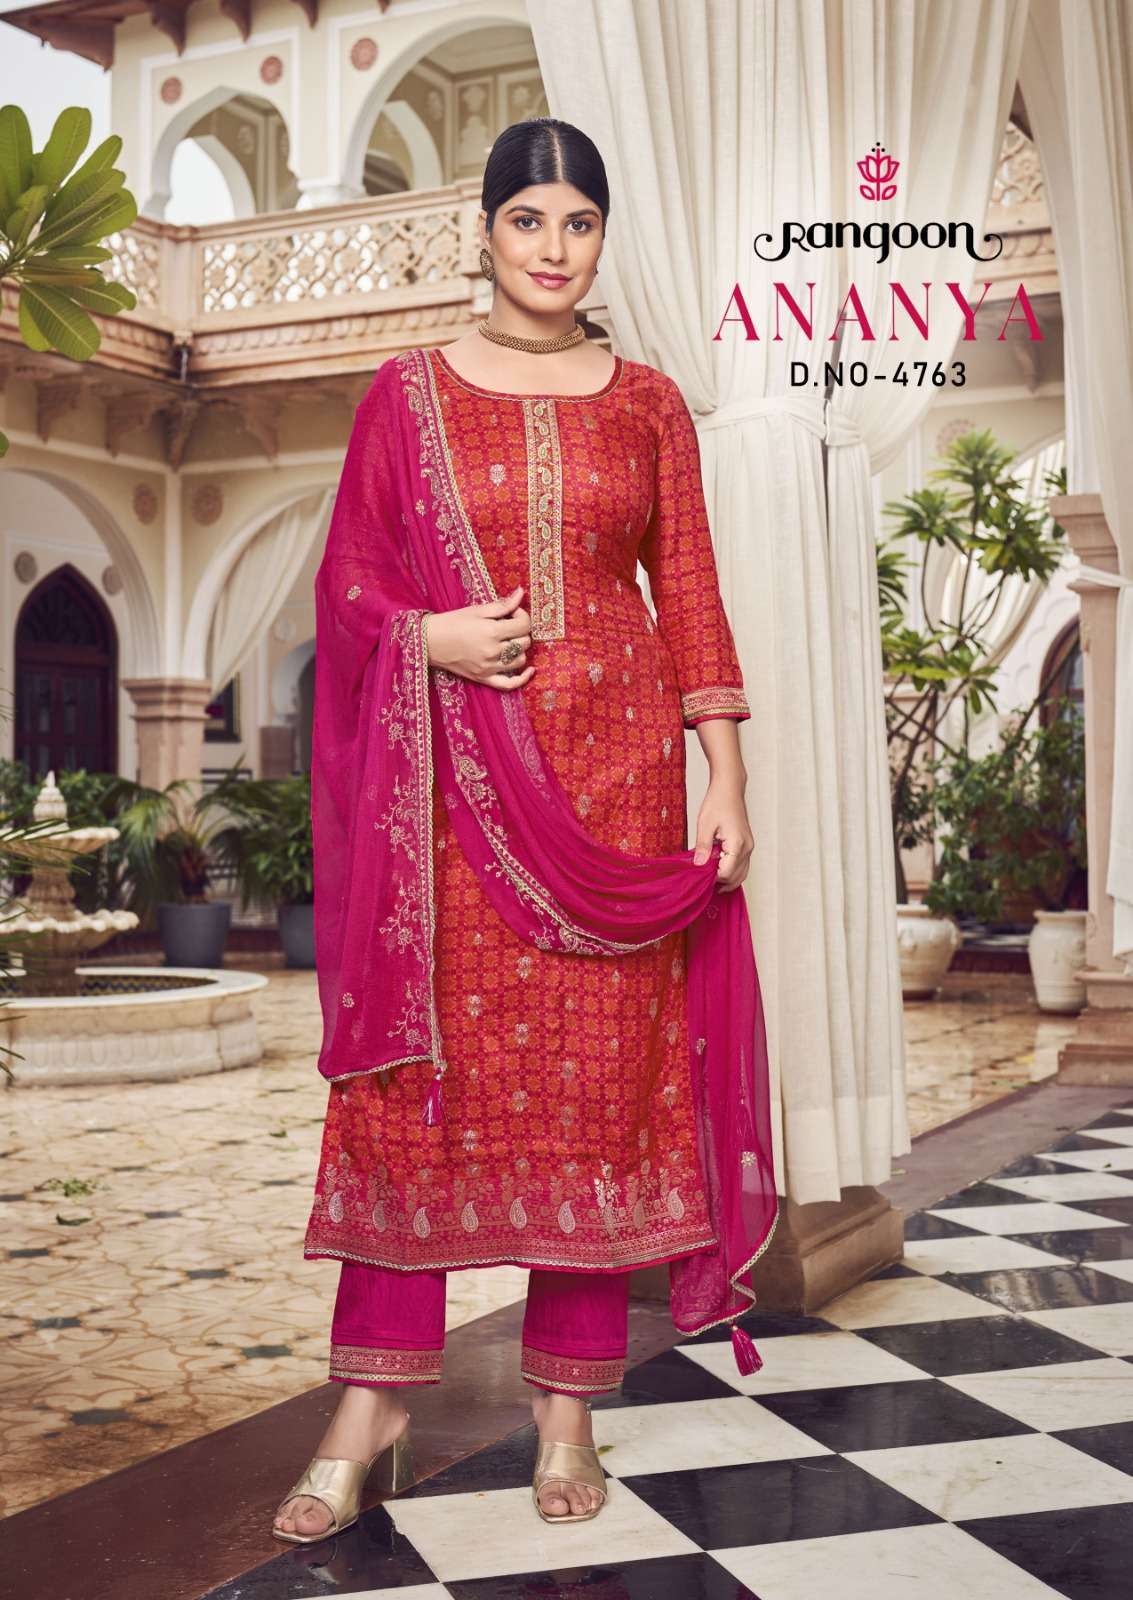 Rangoon Ananya trendy kurti pant dupatta wholesale price in surat